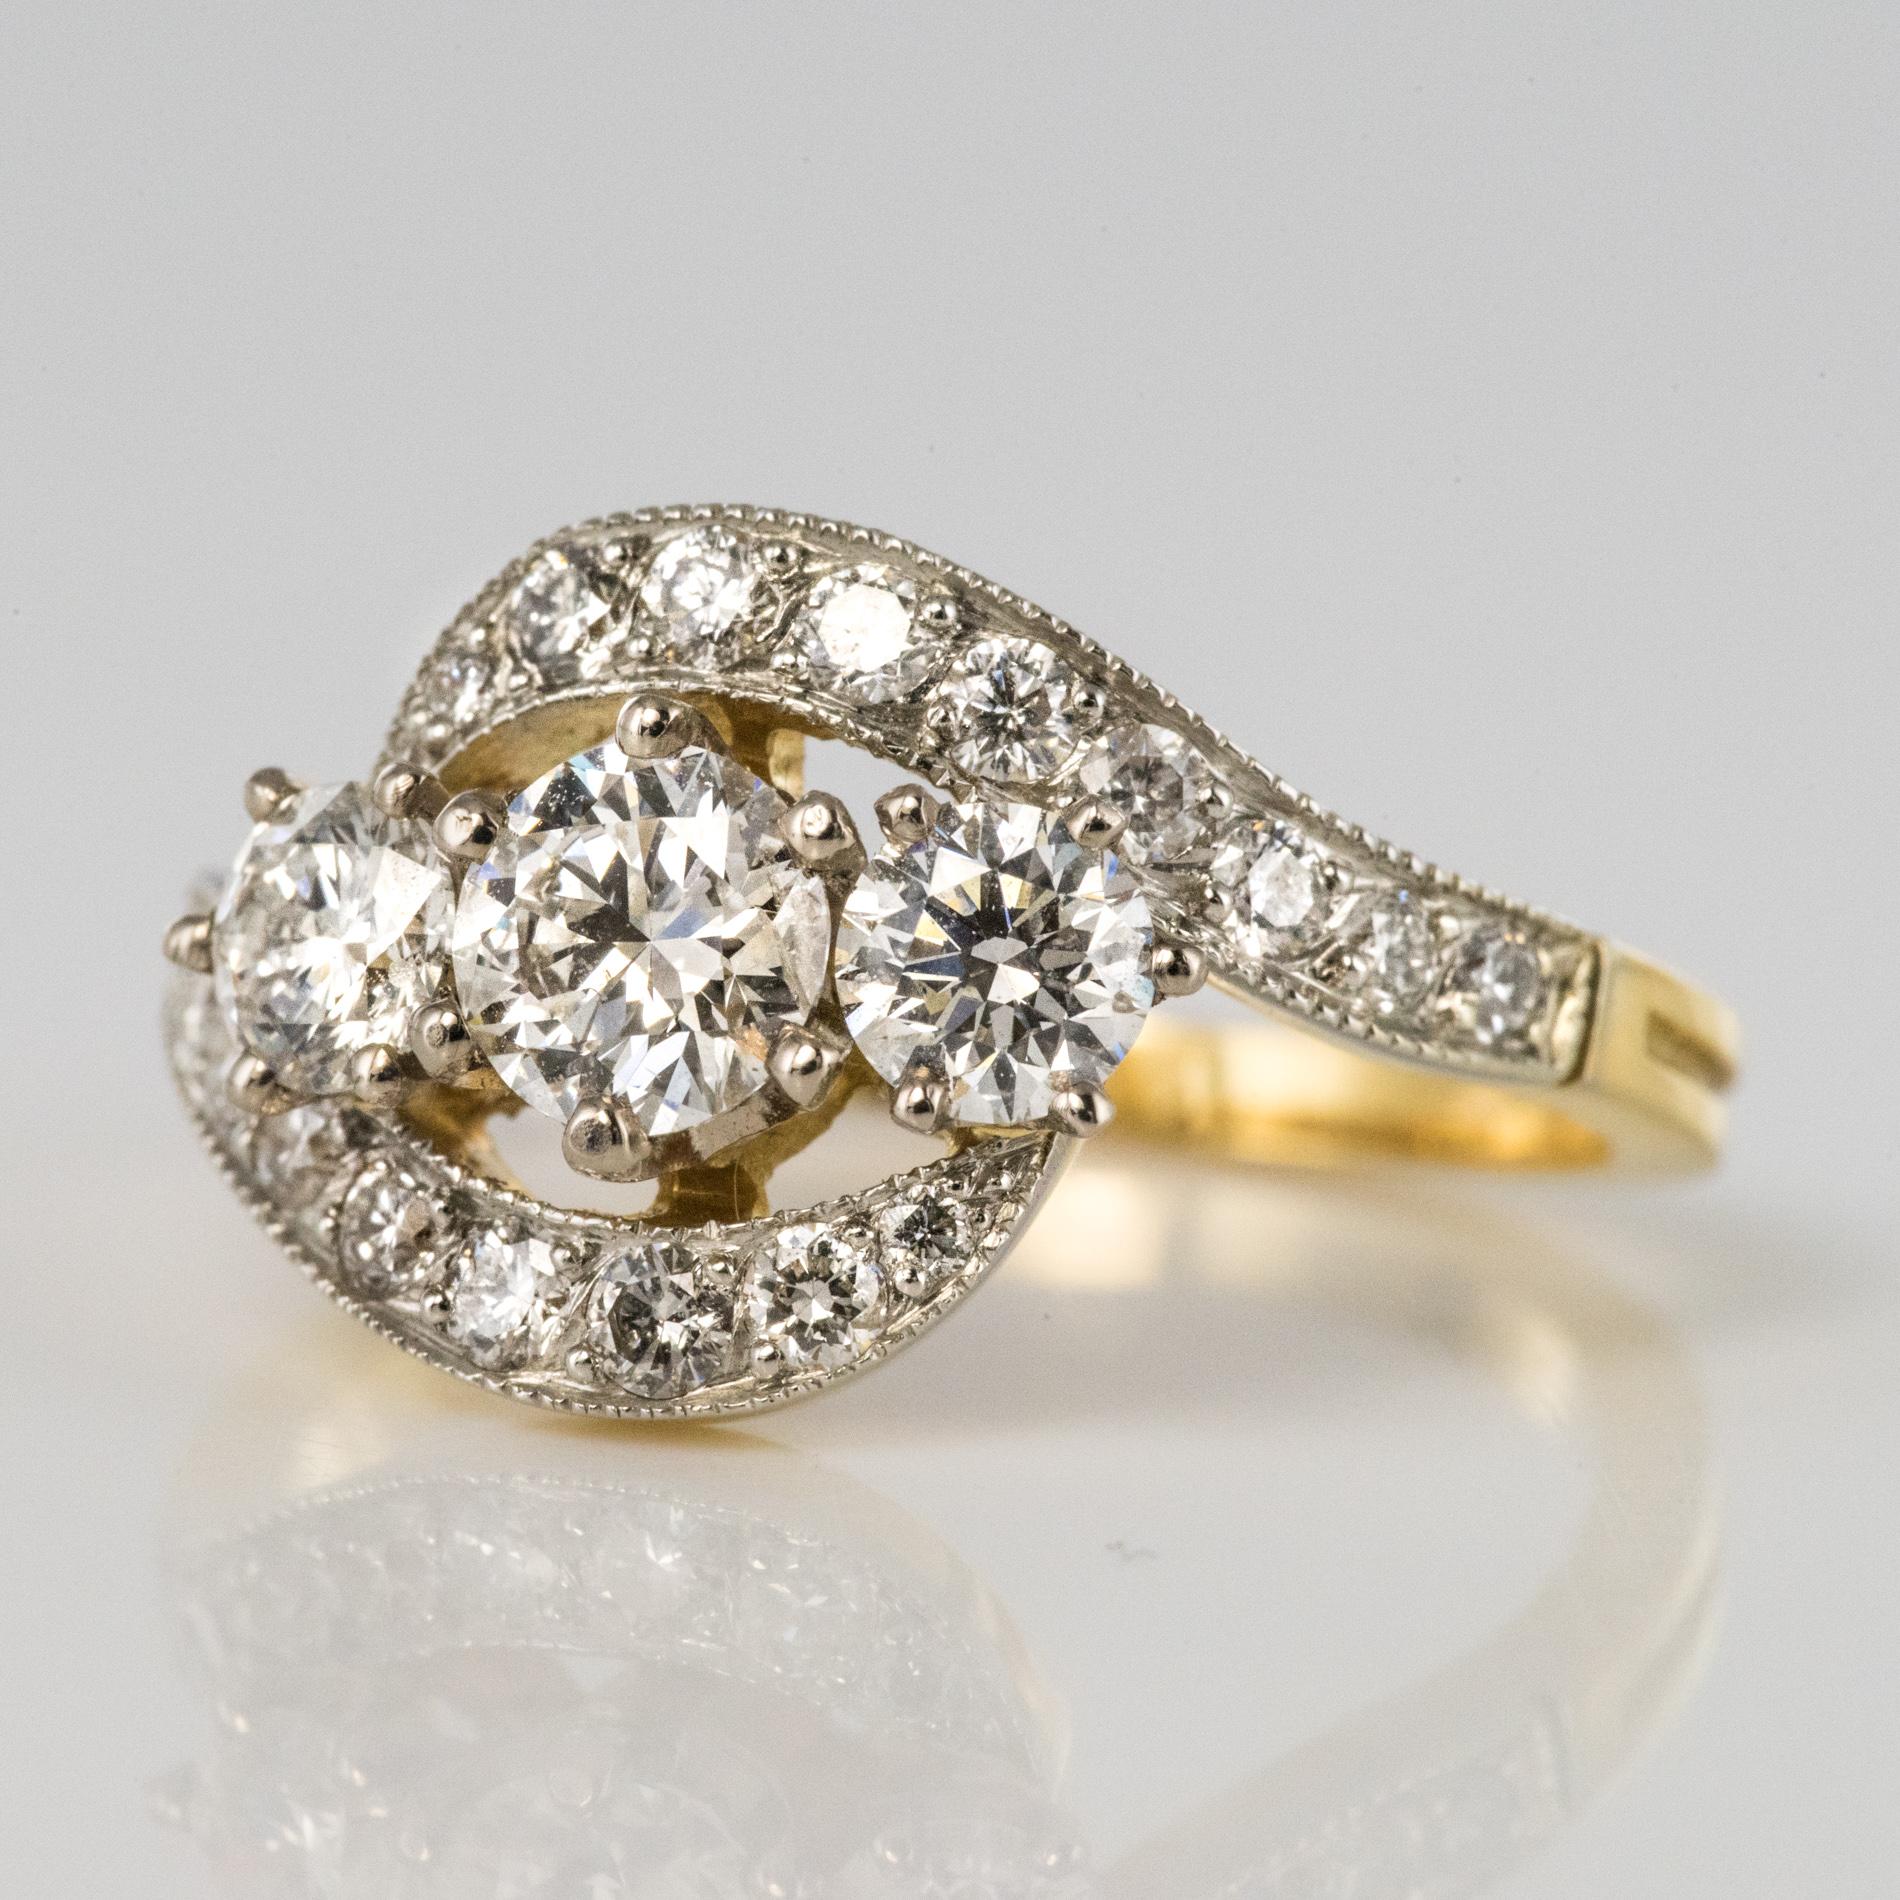 Neuer Trilogie-Ring aus 18 Karat Gelbgold mit 1 Karat Diamanten (Romantik) im Angebot